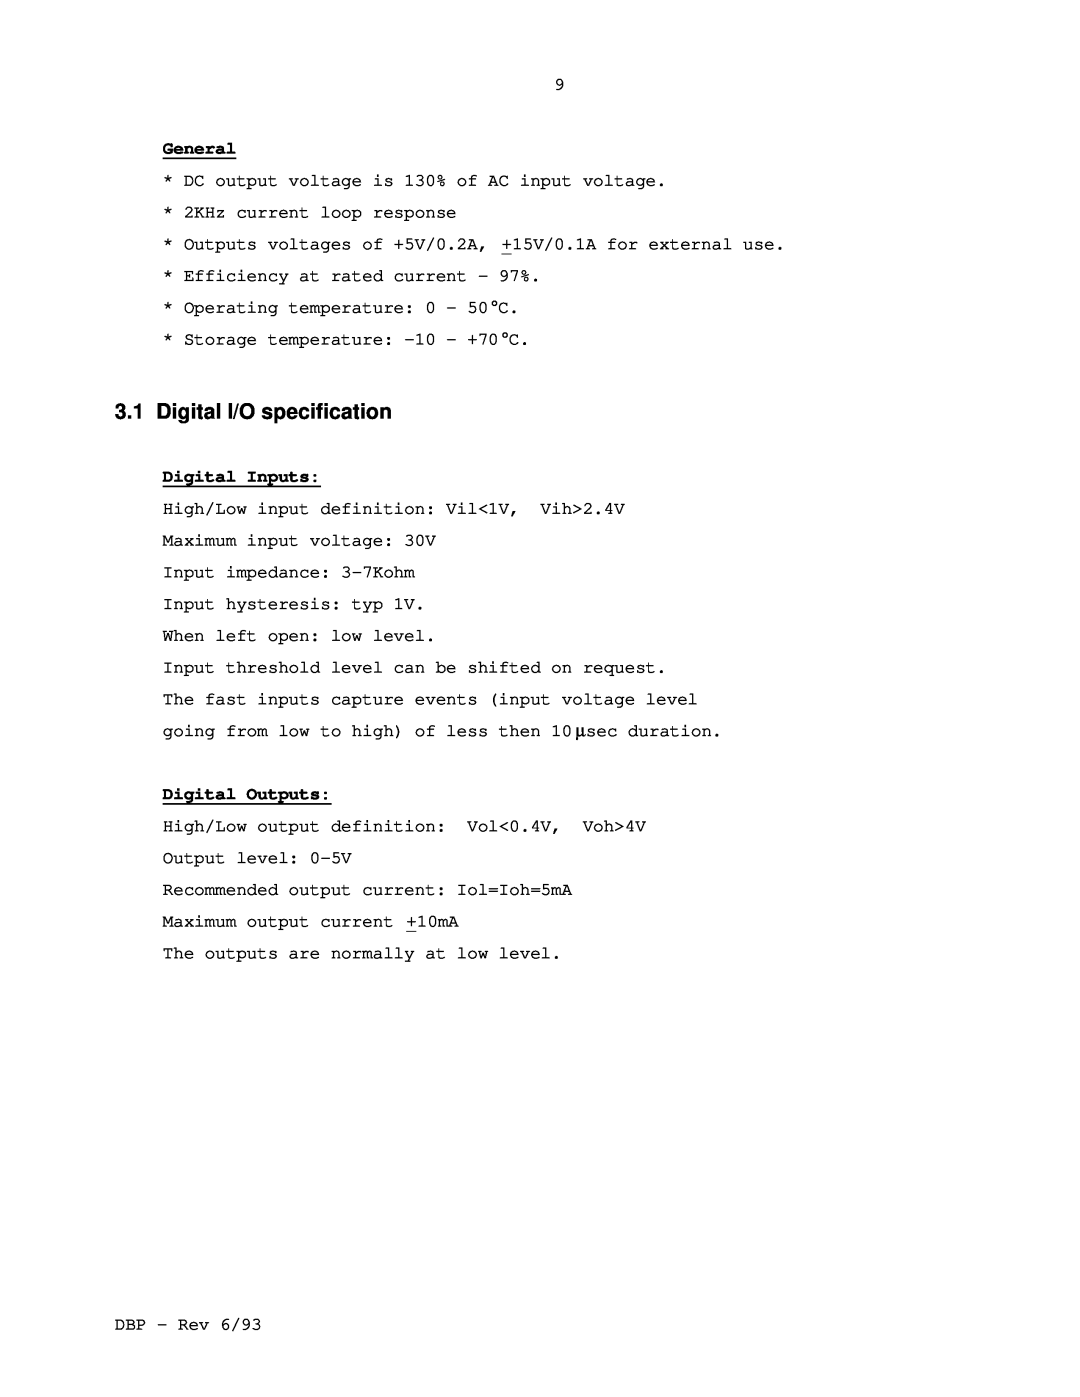 Elmo DBP SERIES manual 3.1Digital I/O specification, General, Digital Inputs, Digital Outputs 